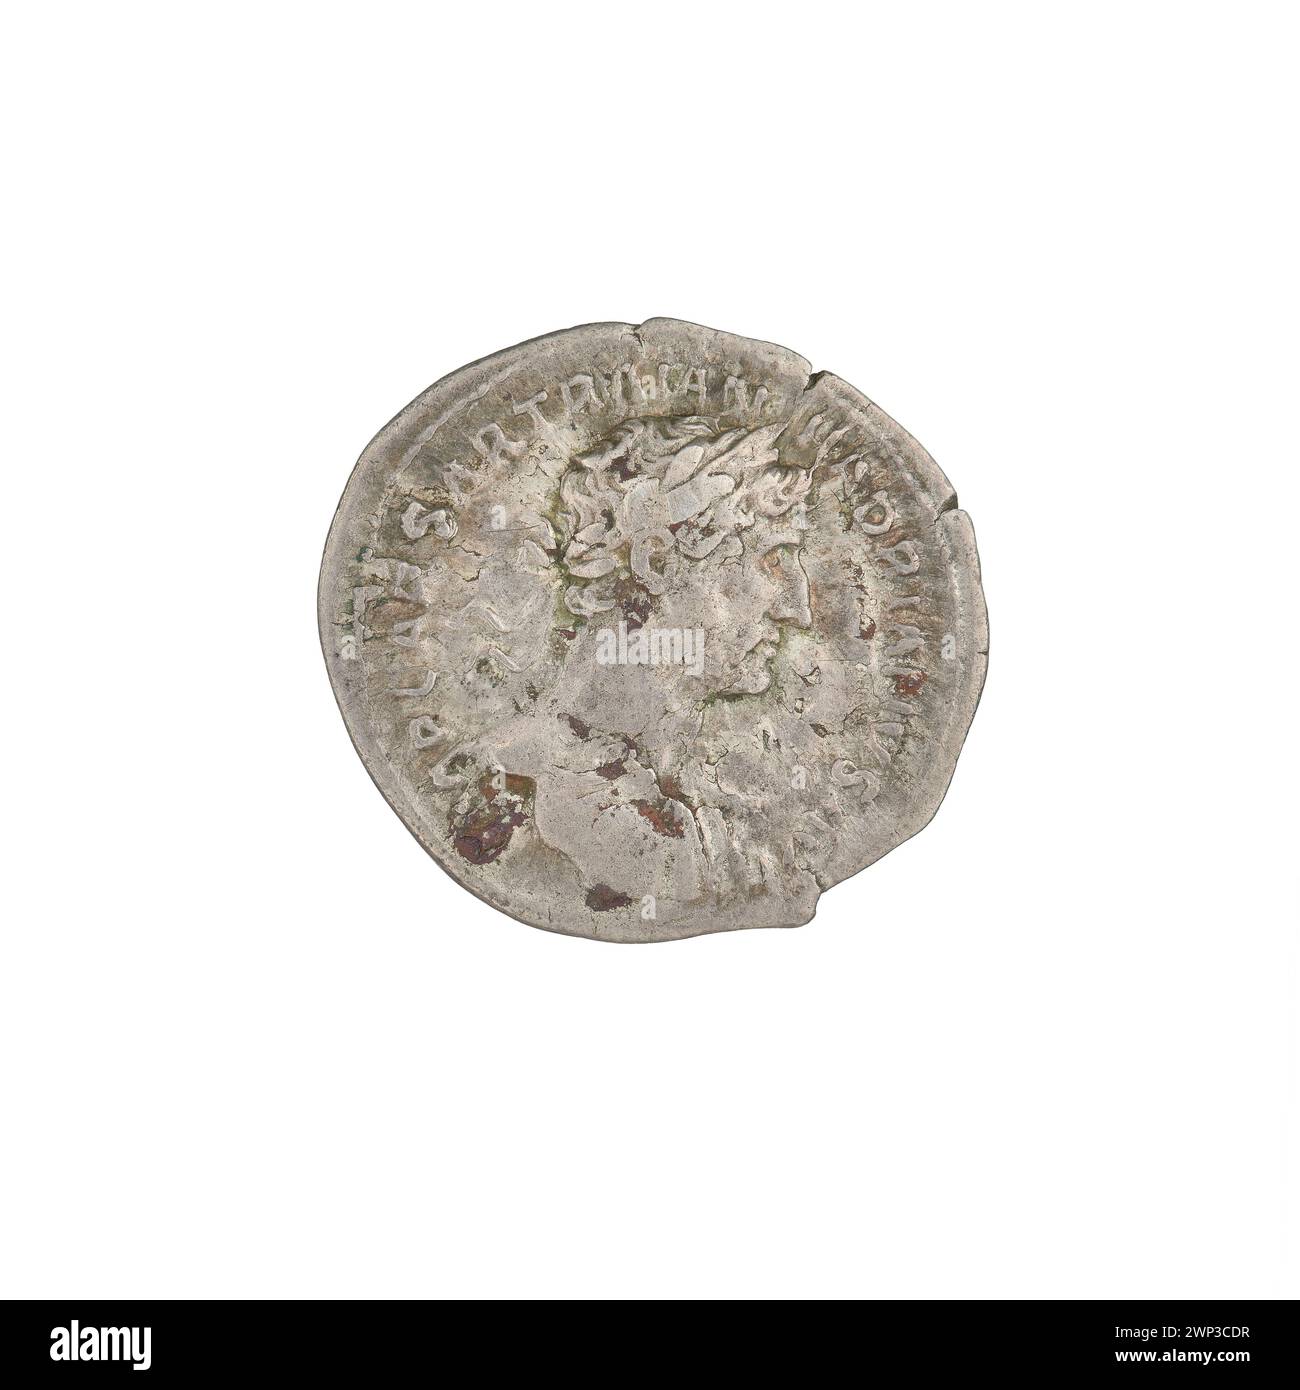 denarius; Hadrian (76-138; Roman emperor 117-138); 118 (114-00-00-117-00-00);Concordia (personification), heads, plates, laurel wreaths Stock Photo